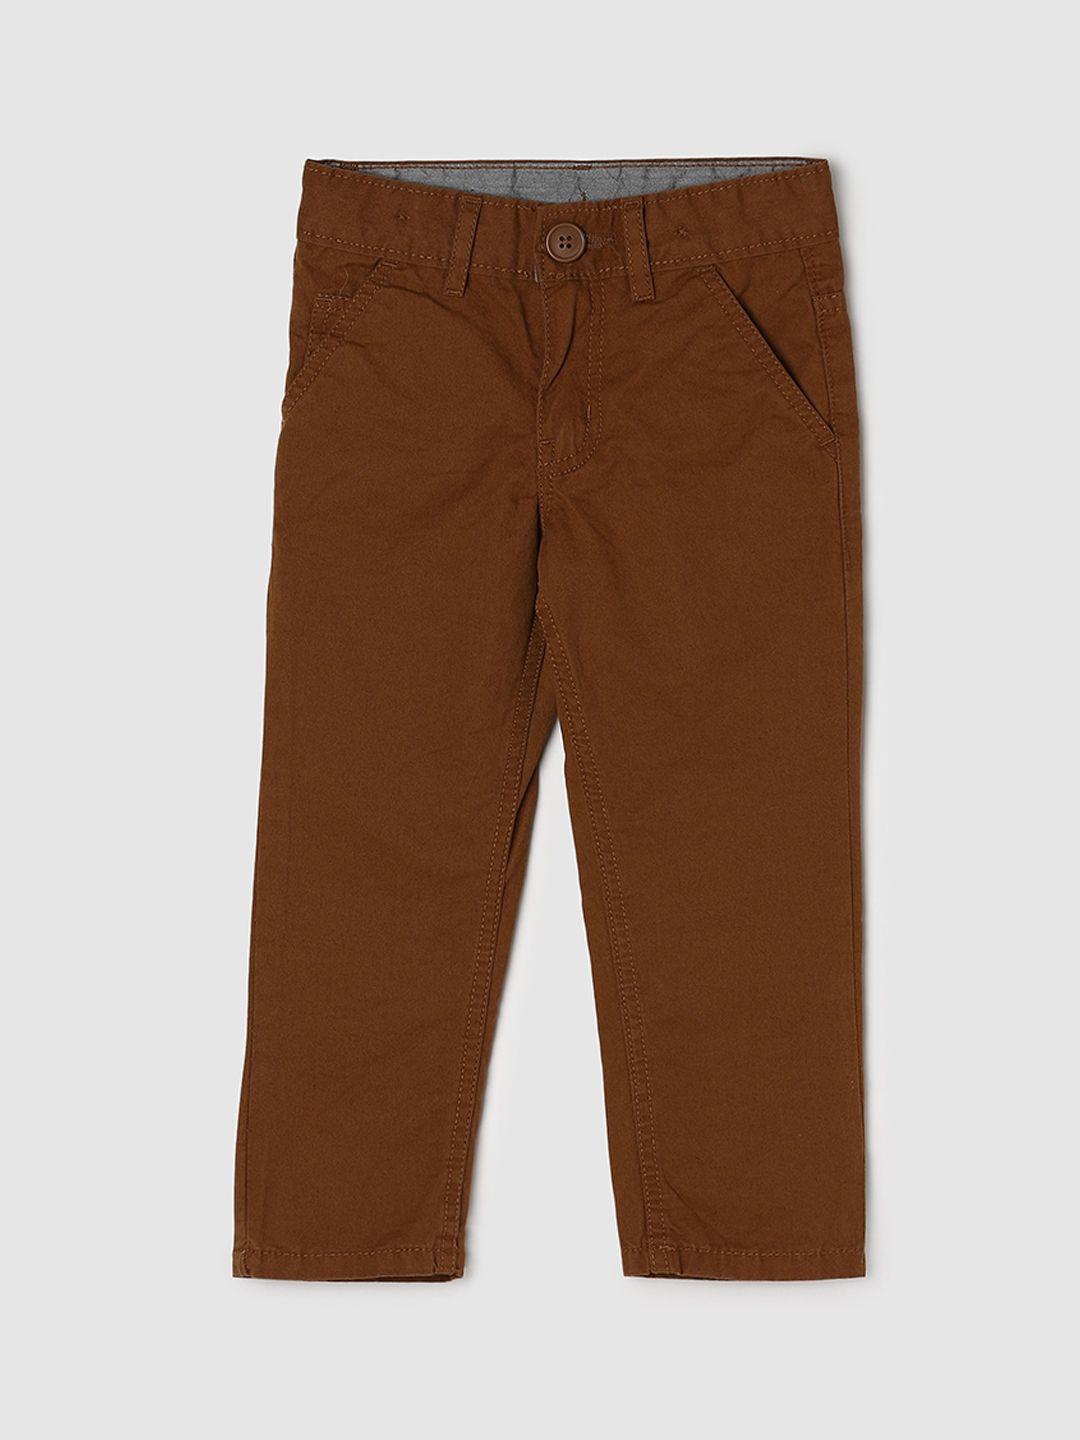 max-boys-mid-rise-plain-flat-front-cotton-trousers